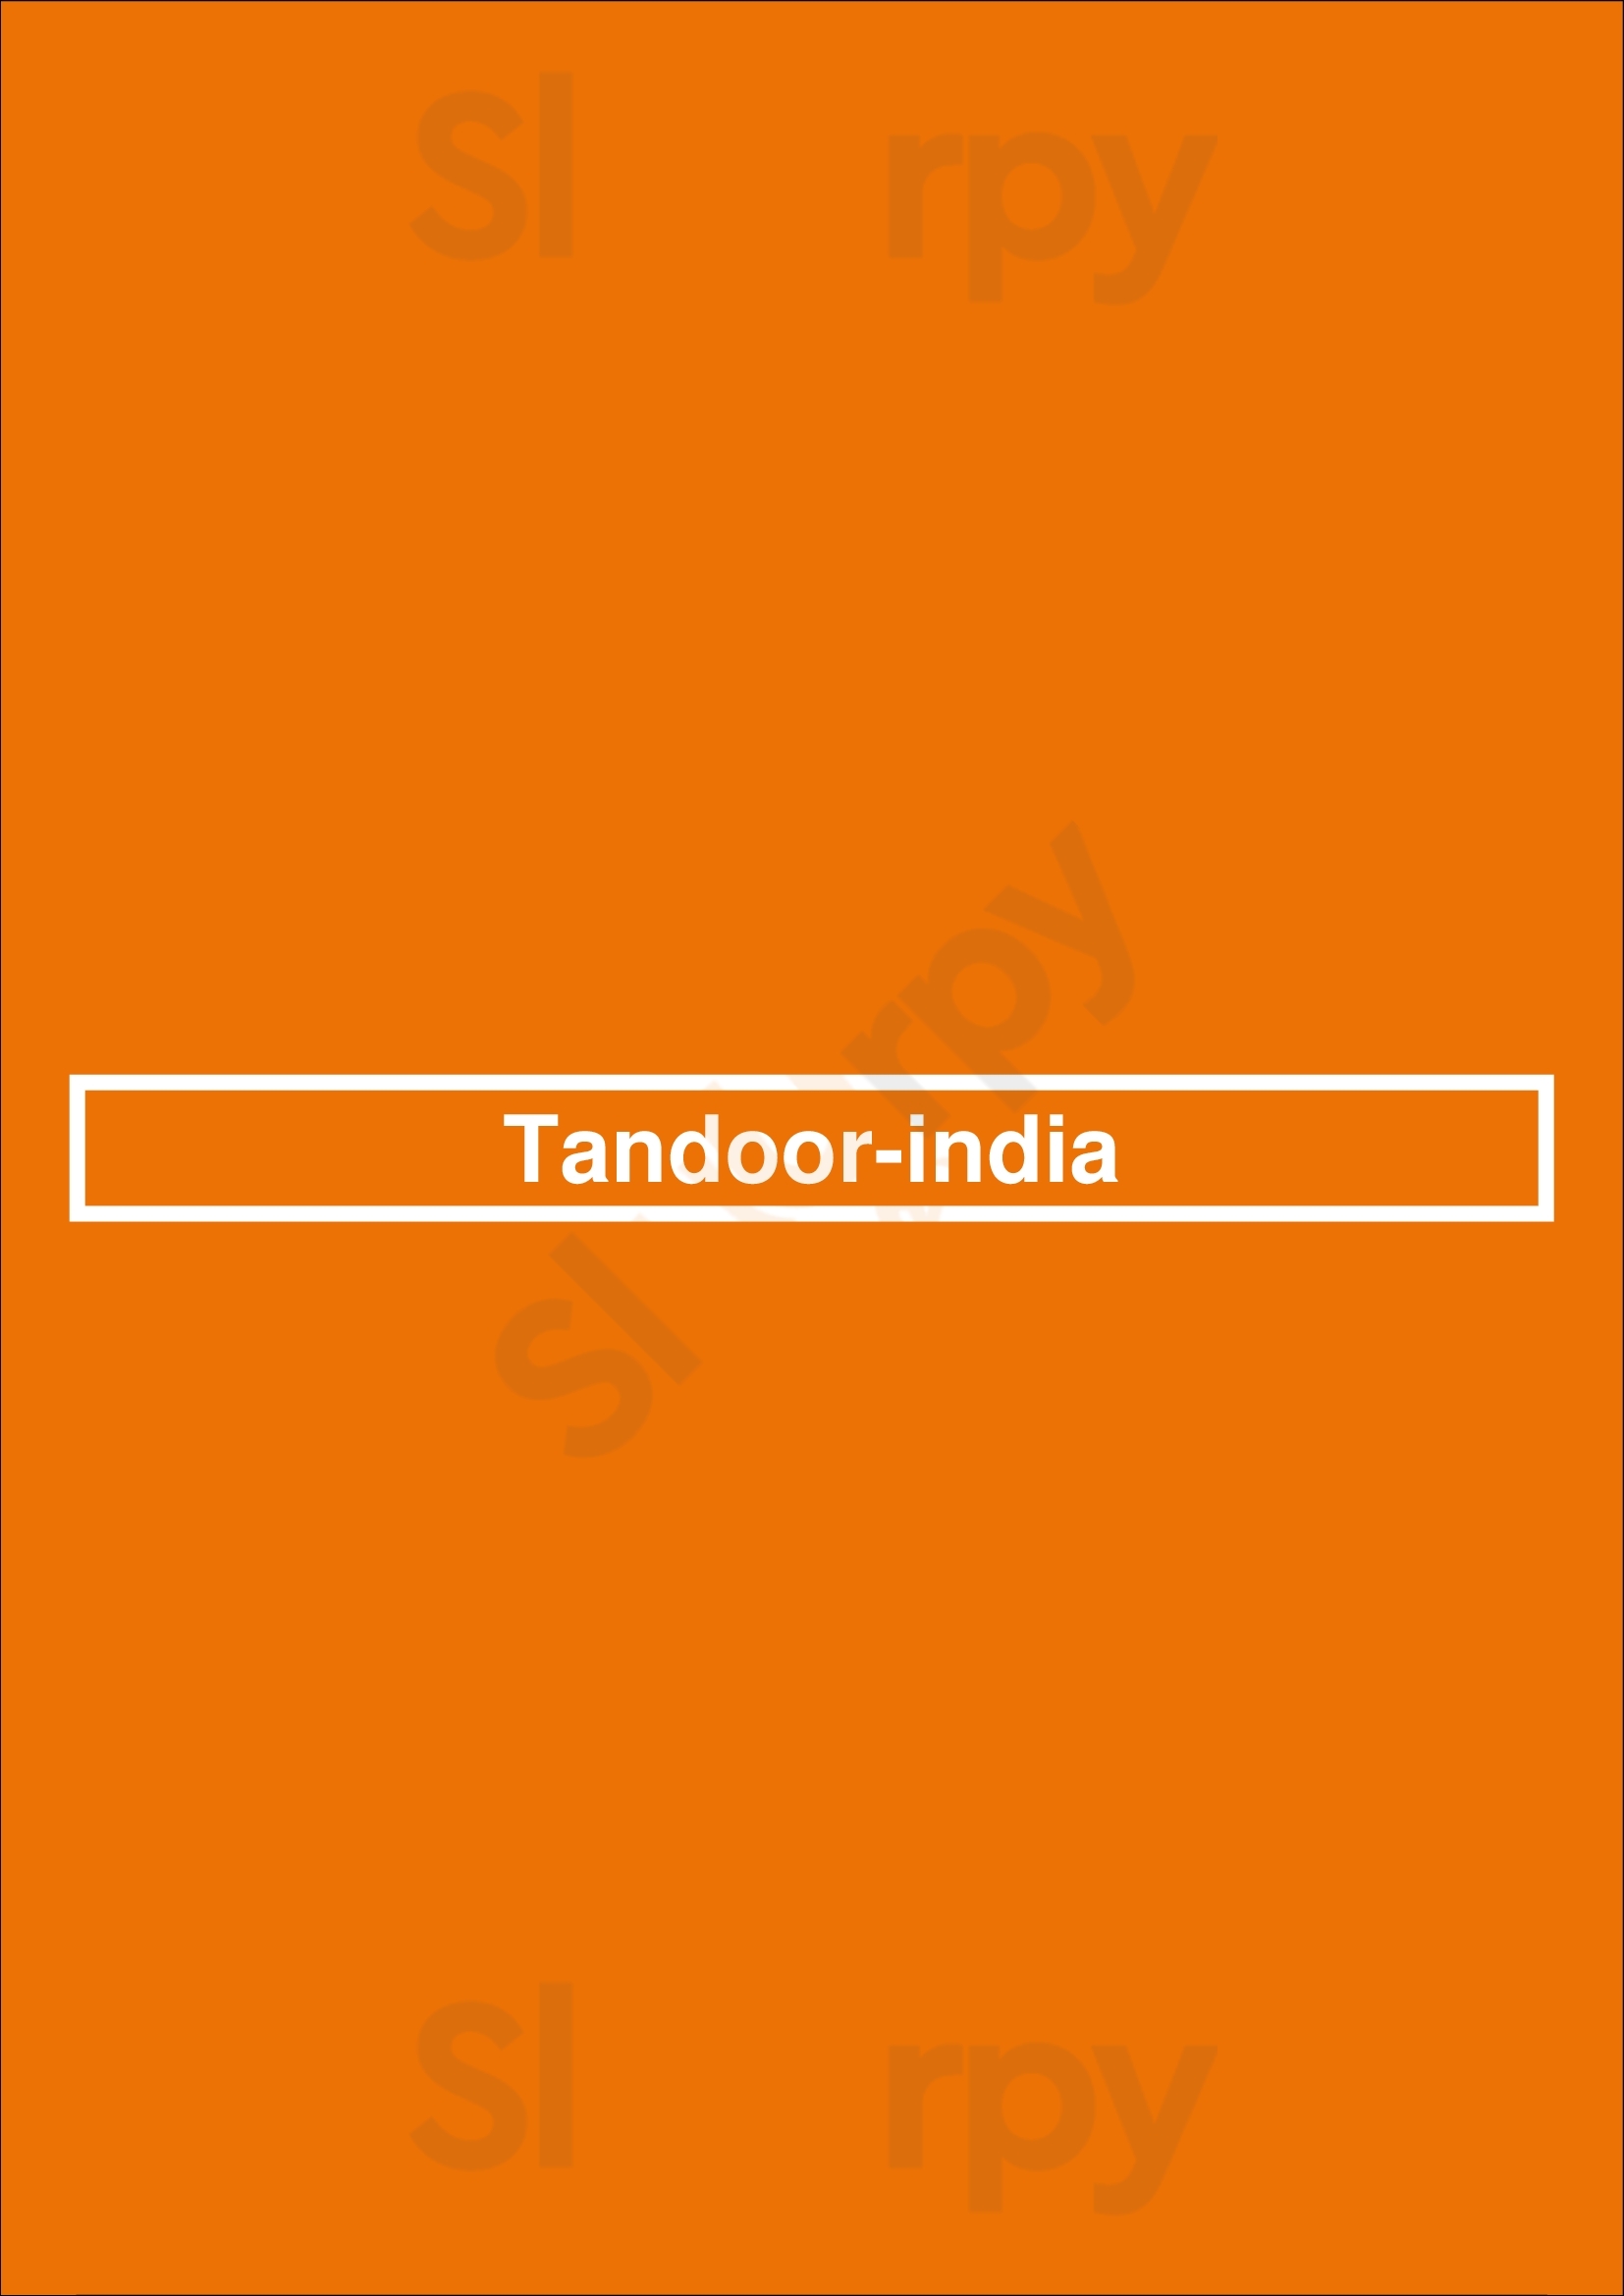 Tandoor-india Santa Monica Menu - 1